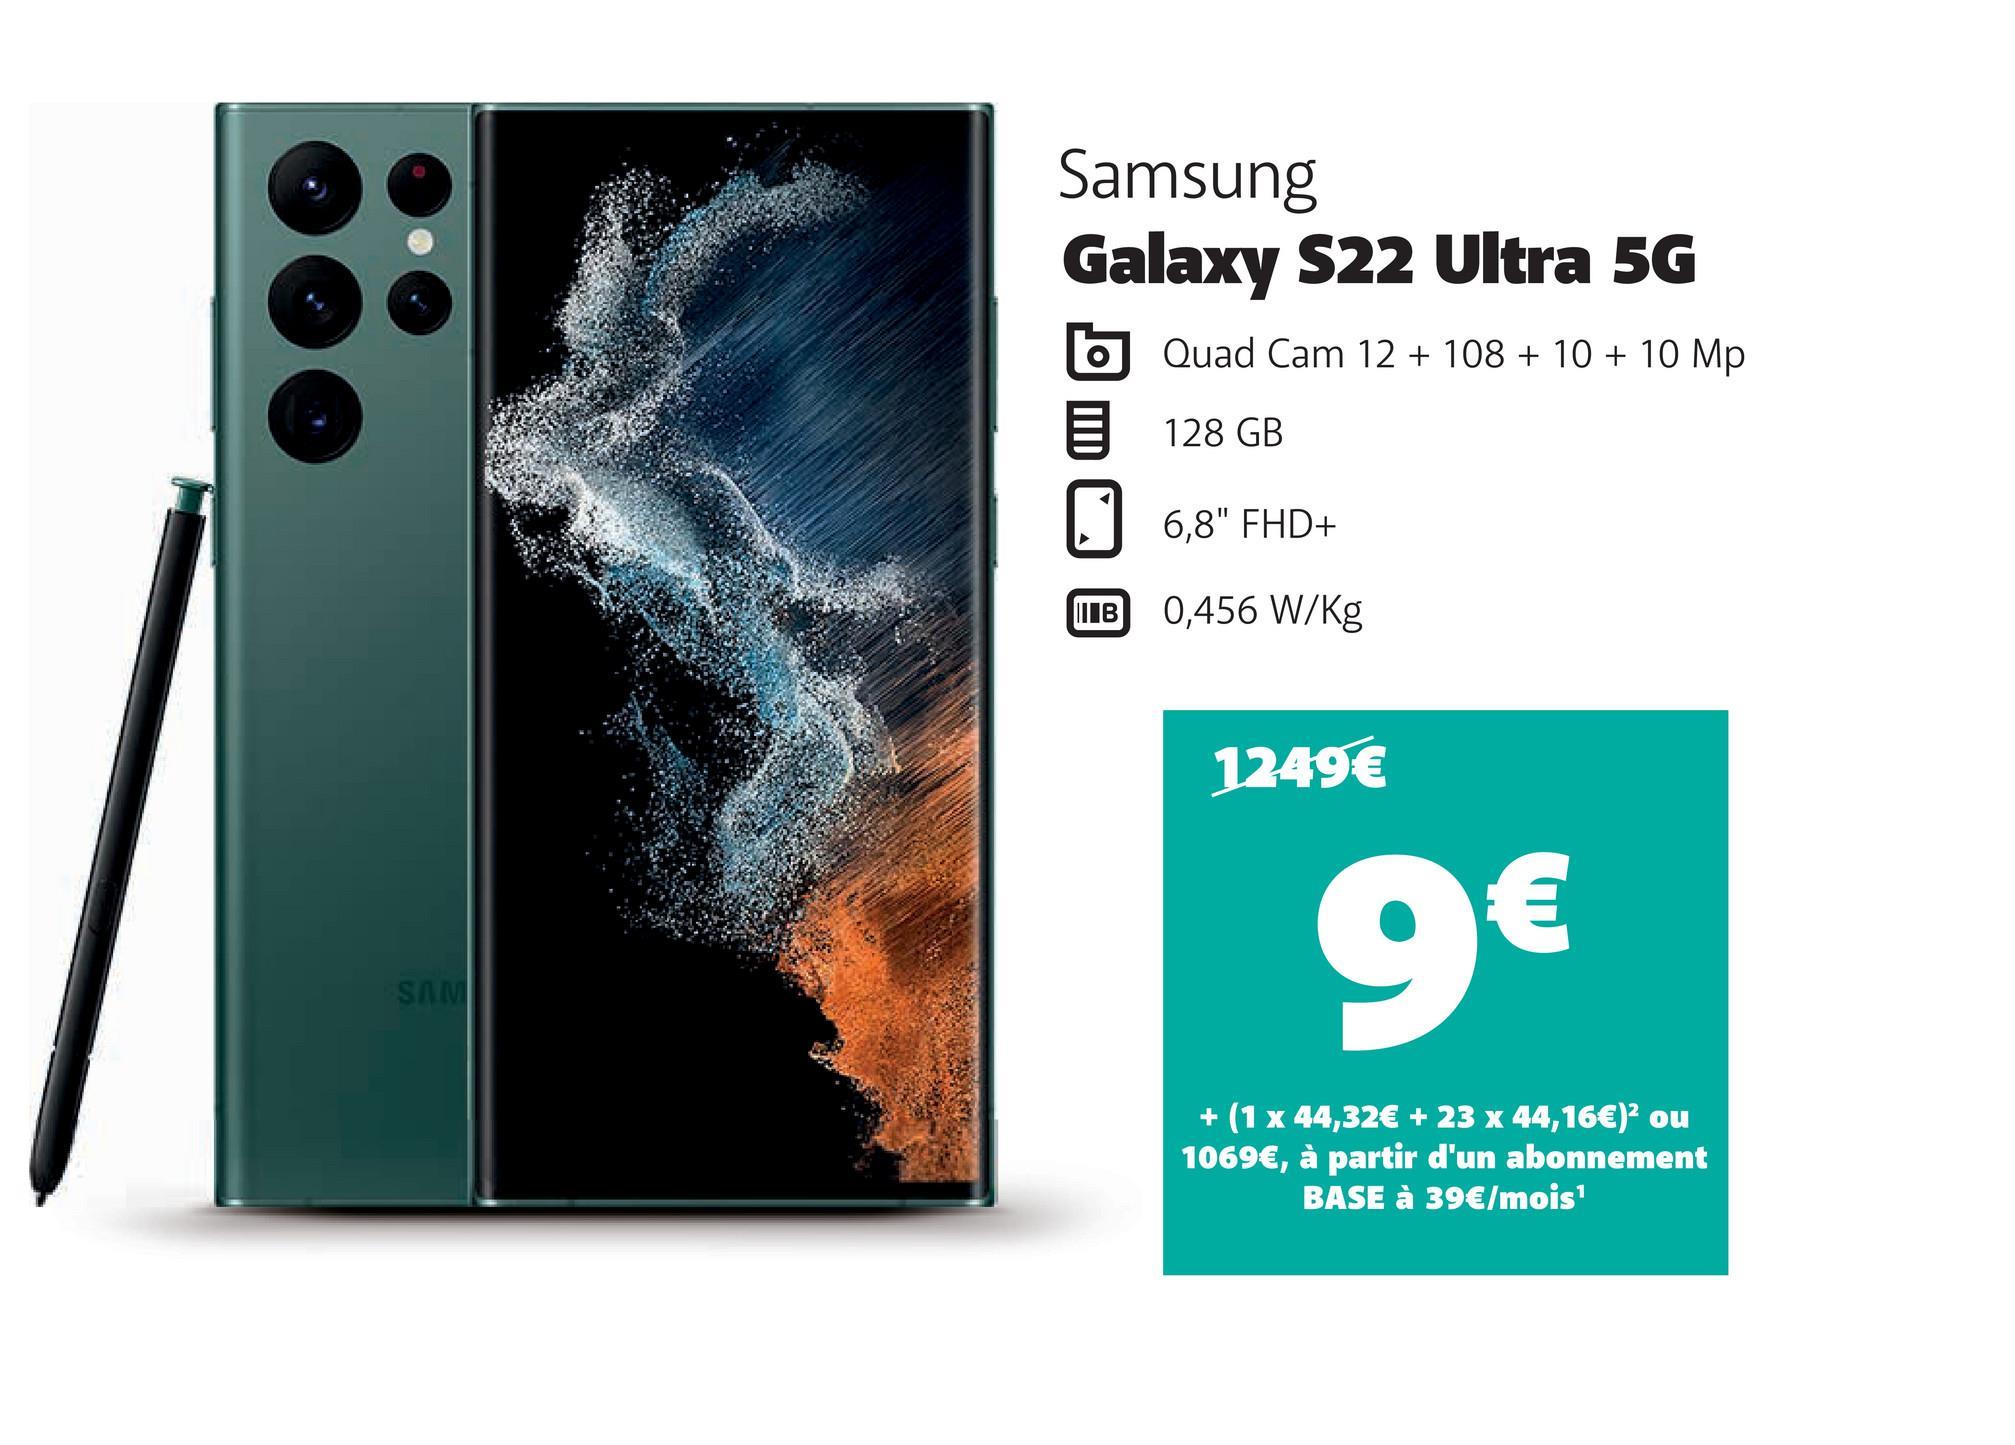 88
SAM
Samsung
Galaxy S22 Ultra 5G
Quad Cam 12 + 108 + 10 + 10 Mp
128 GB
6,8" FHD+
0,456 W/kg
9€
+ (1 x 44,32€ + 23 x 44,16€)² ou
1069€, à partir d'un abonnement
BASE à 39€/mois¹
IB
1249€